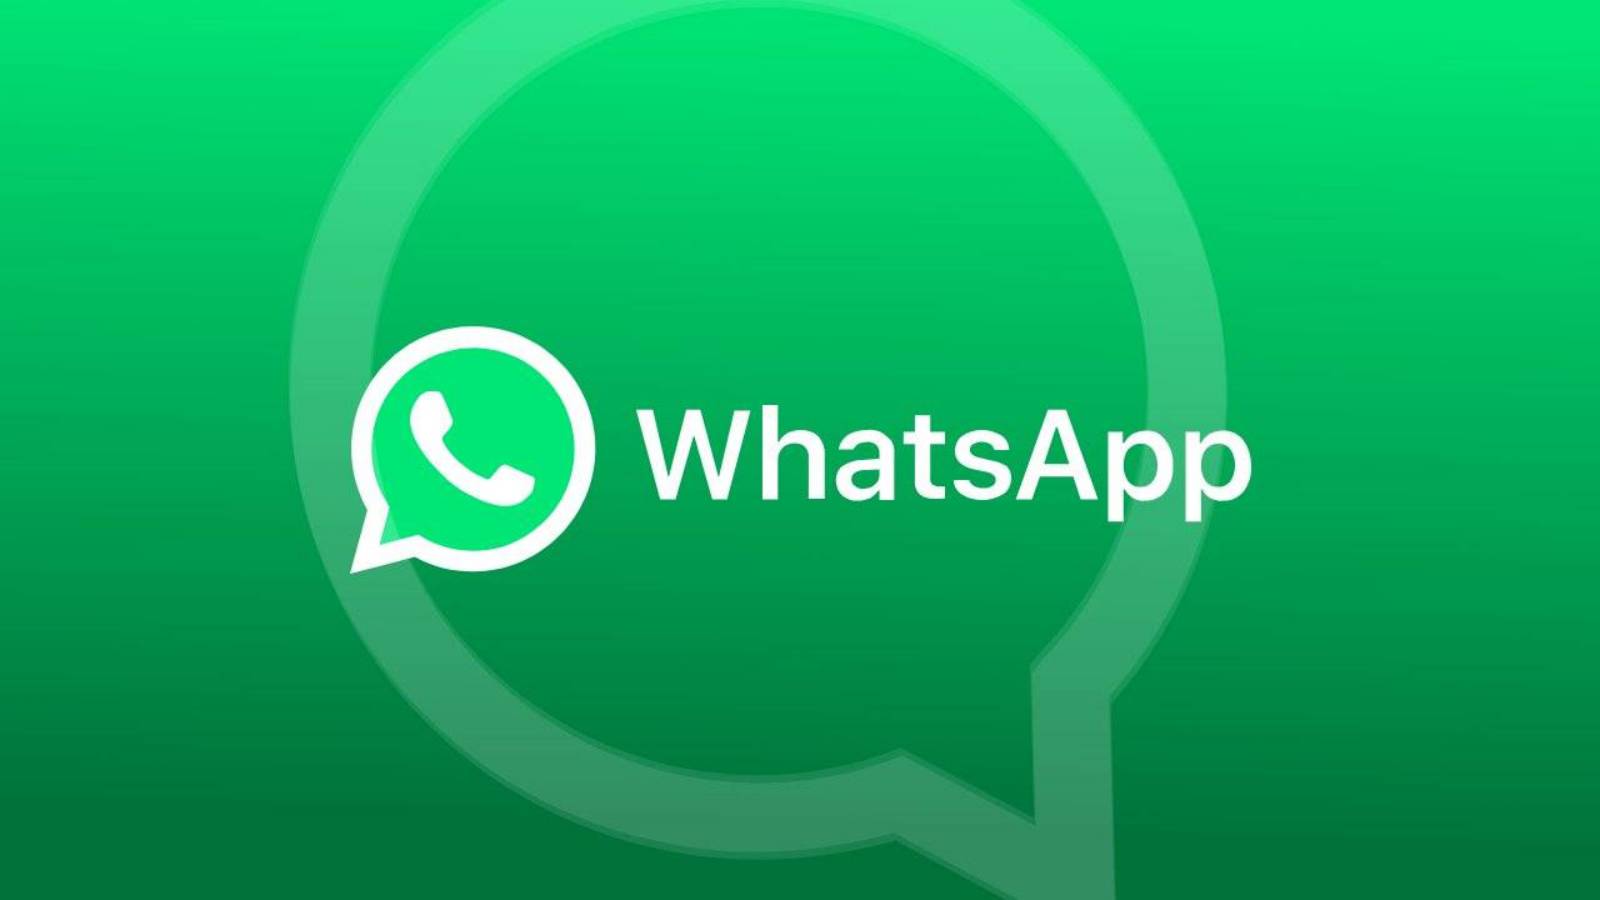 WhatsApp-Broadcast-Blockierung